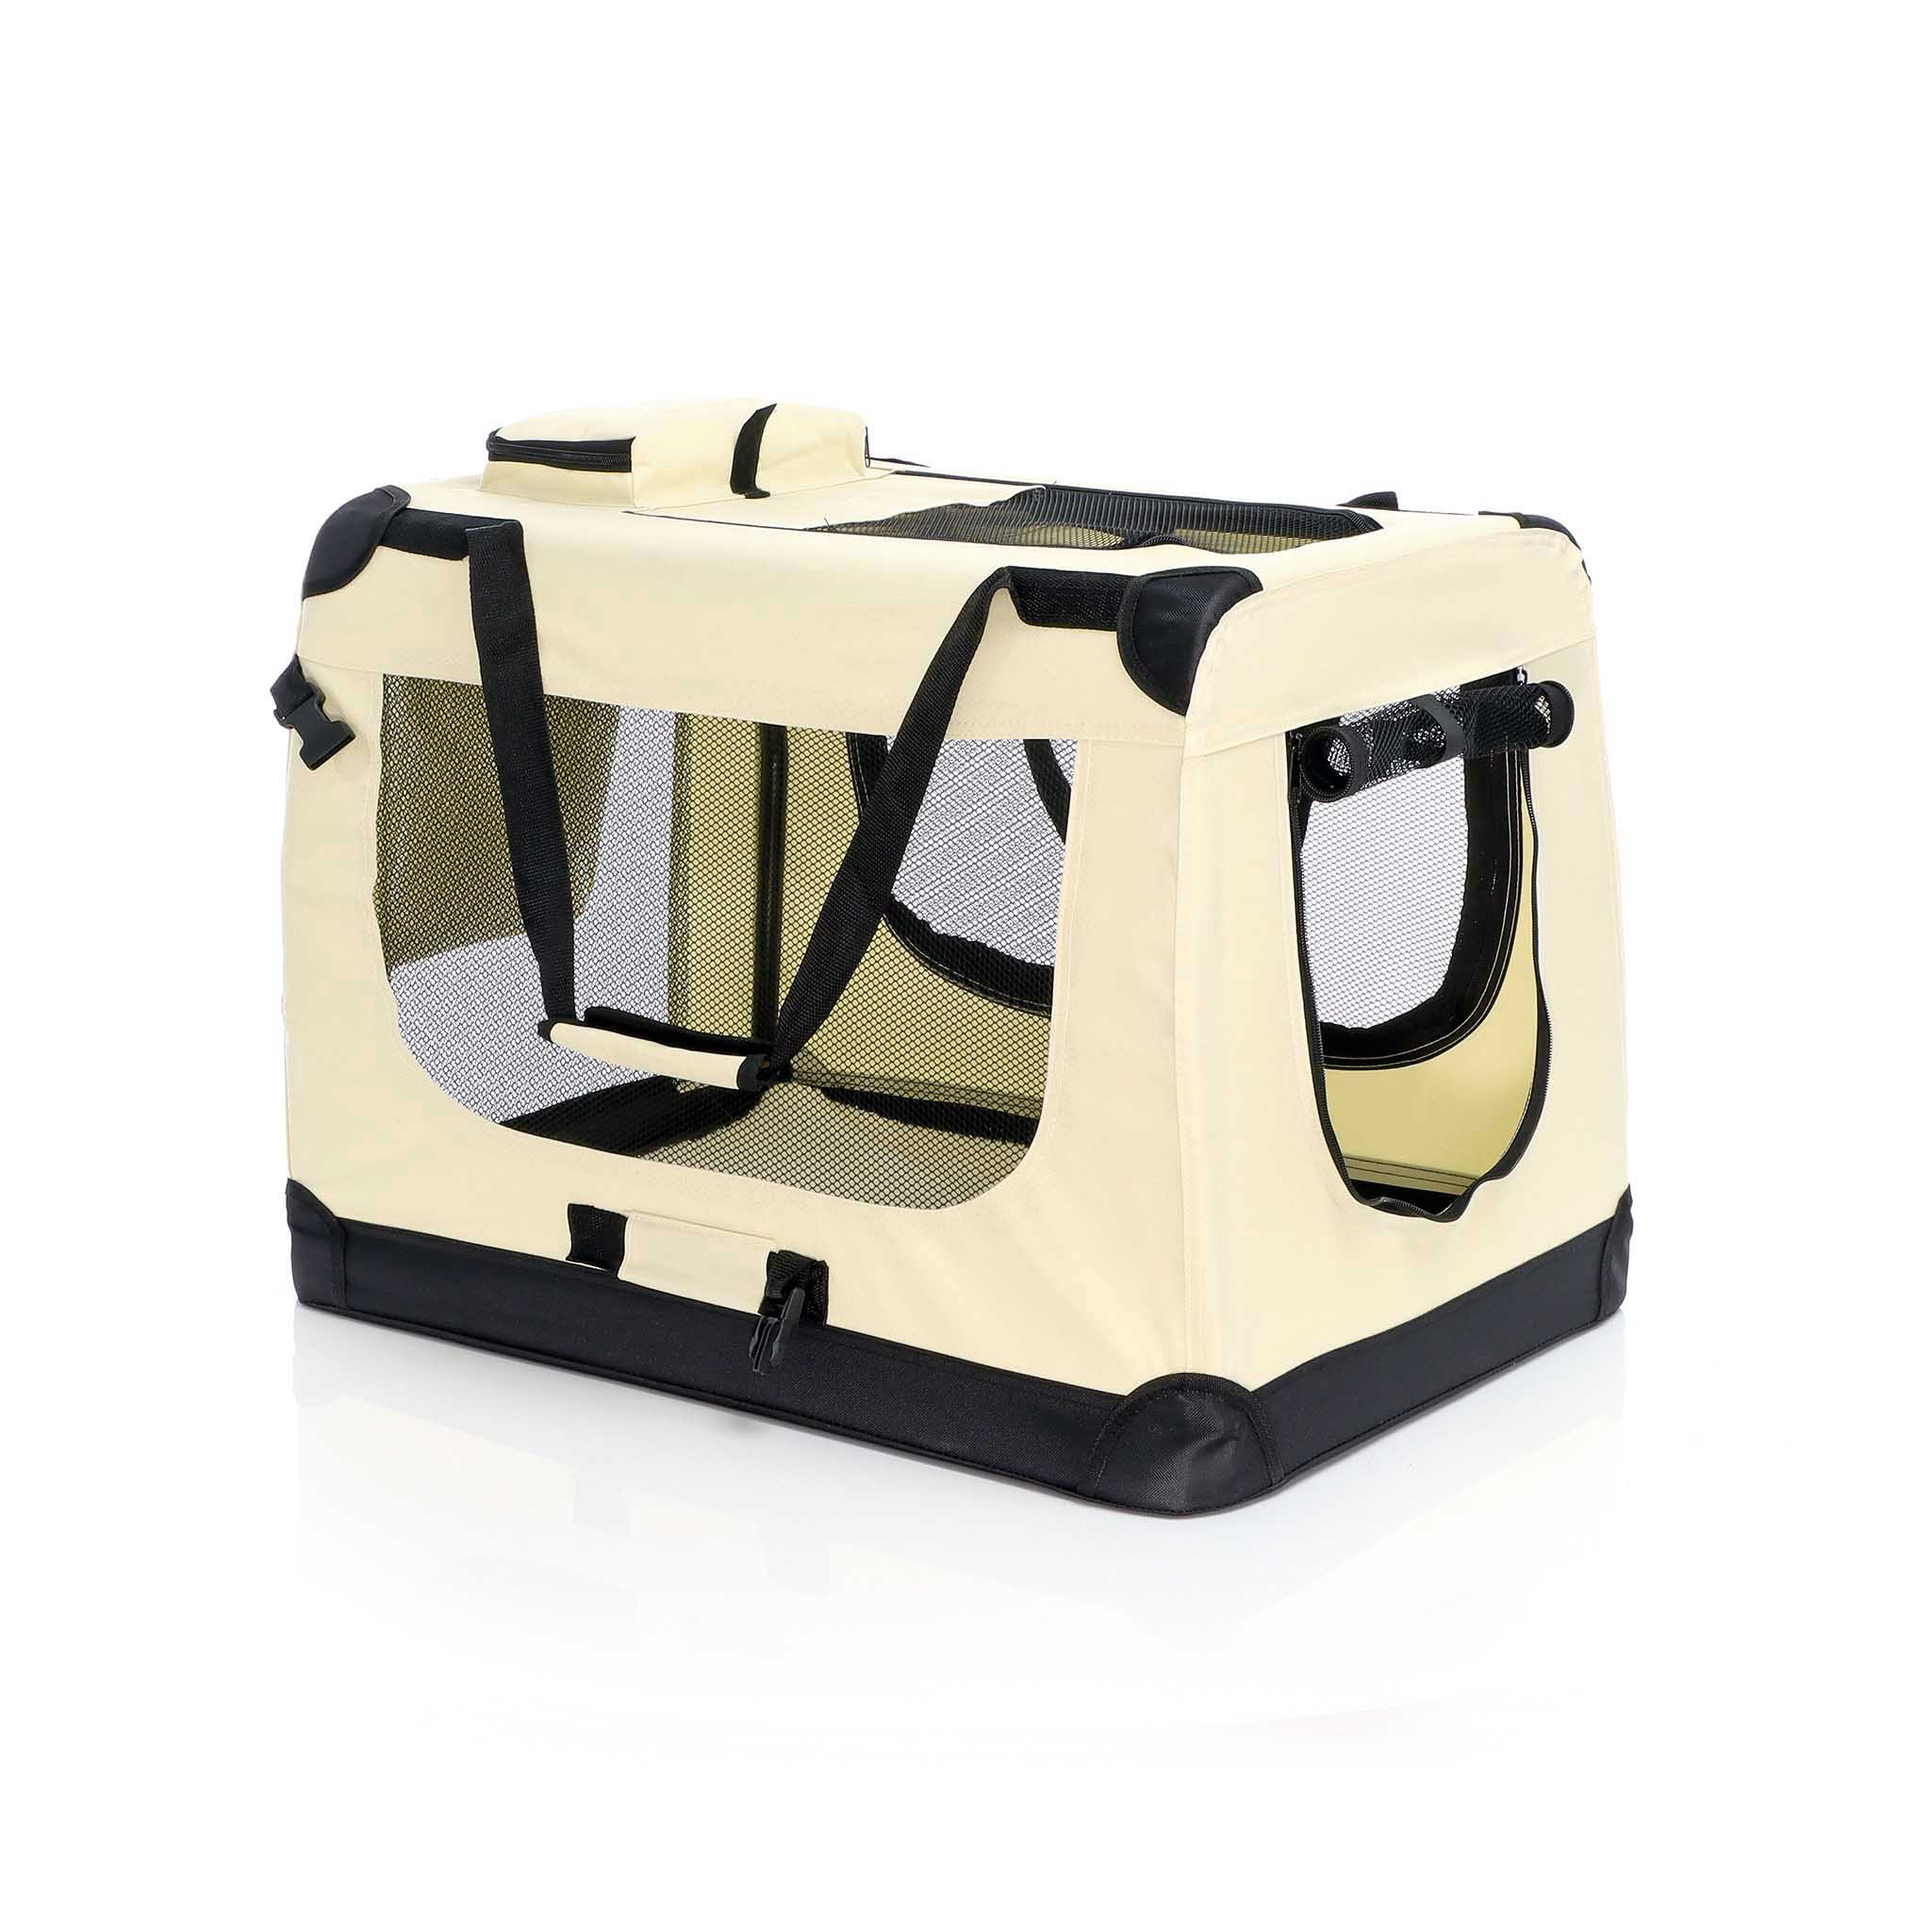 Fudajo faltbare Transportbox Beige für Haustiere Gr. L (70x52x50 cm)